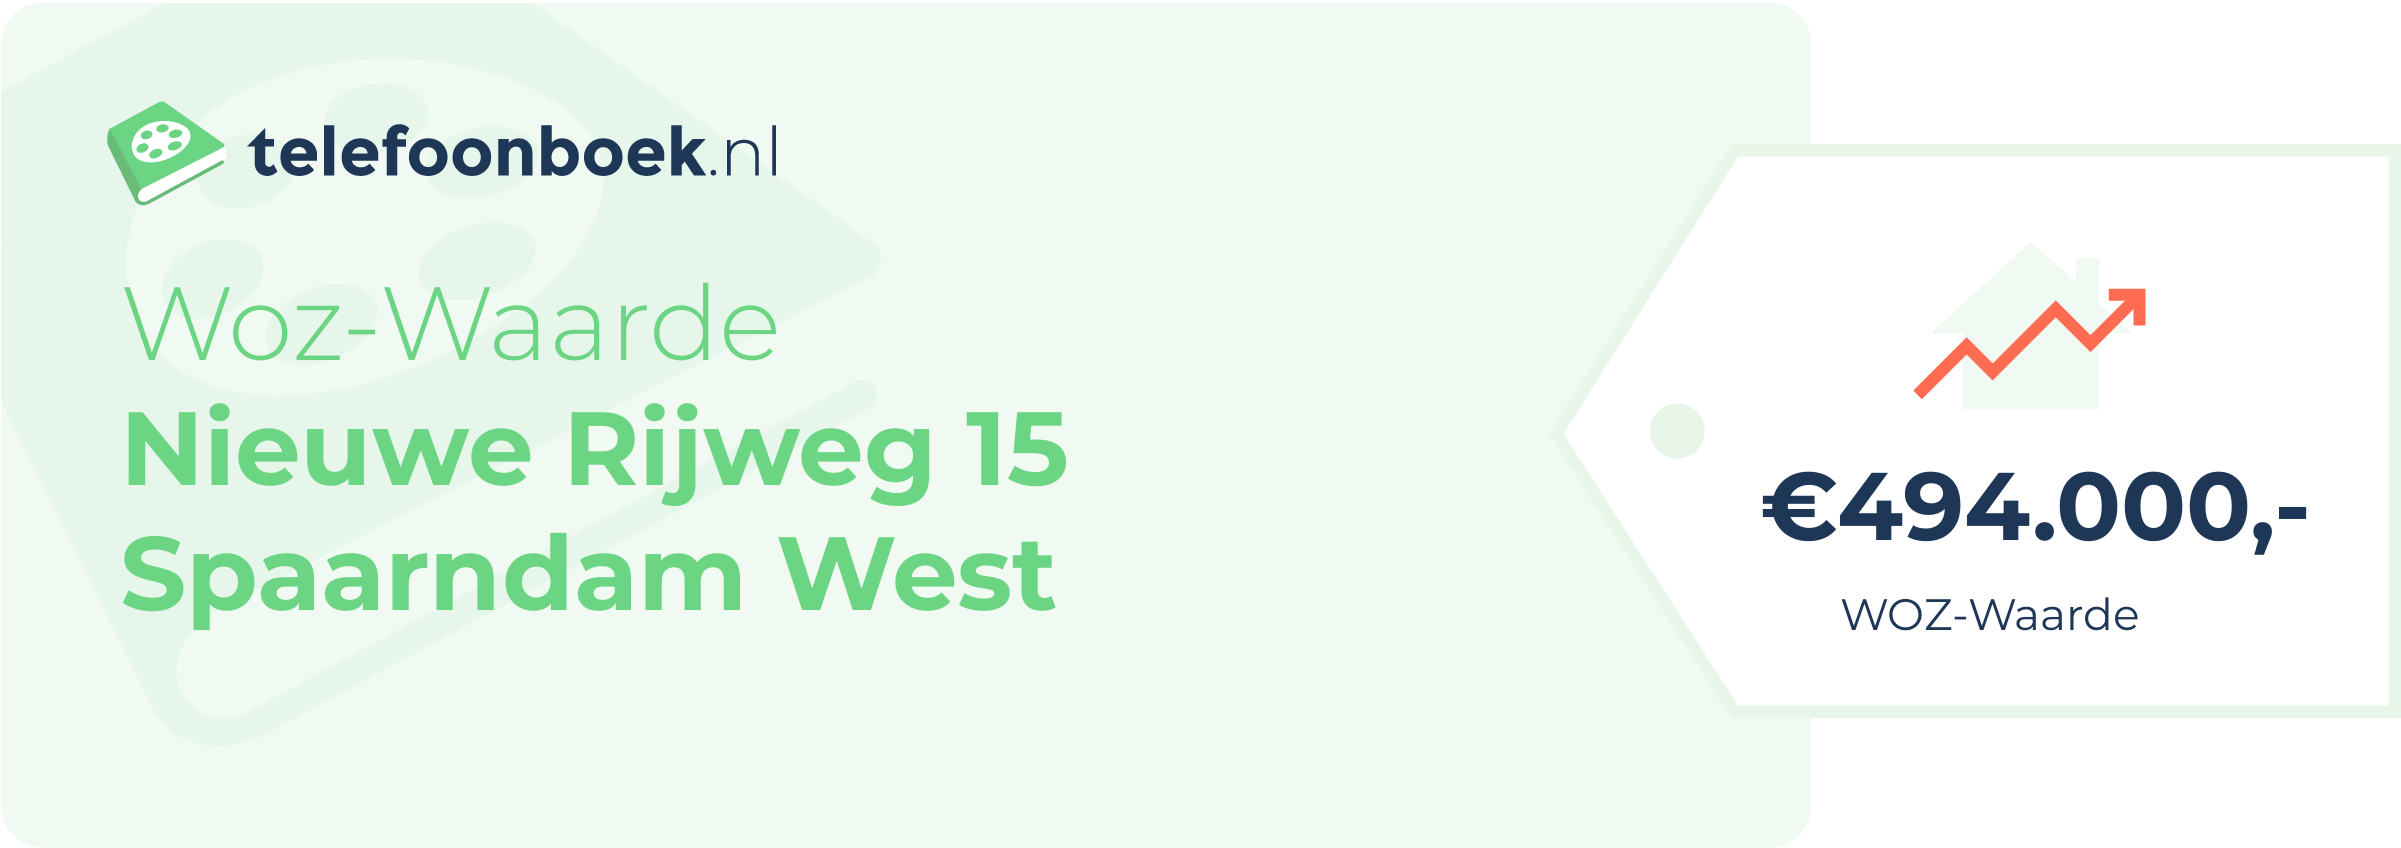 WOZ-waarde Nieuwe Rijweg 15 Spaarndam West